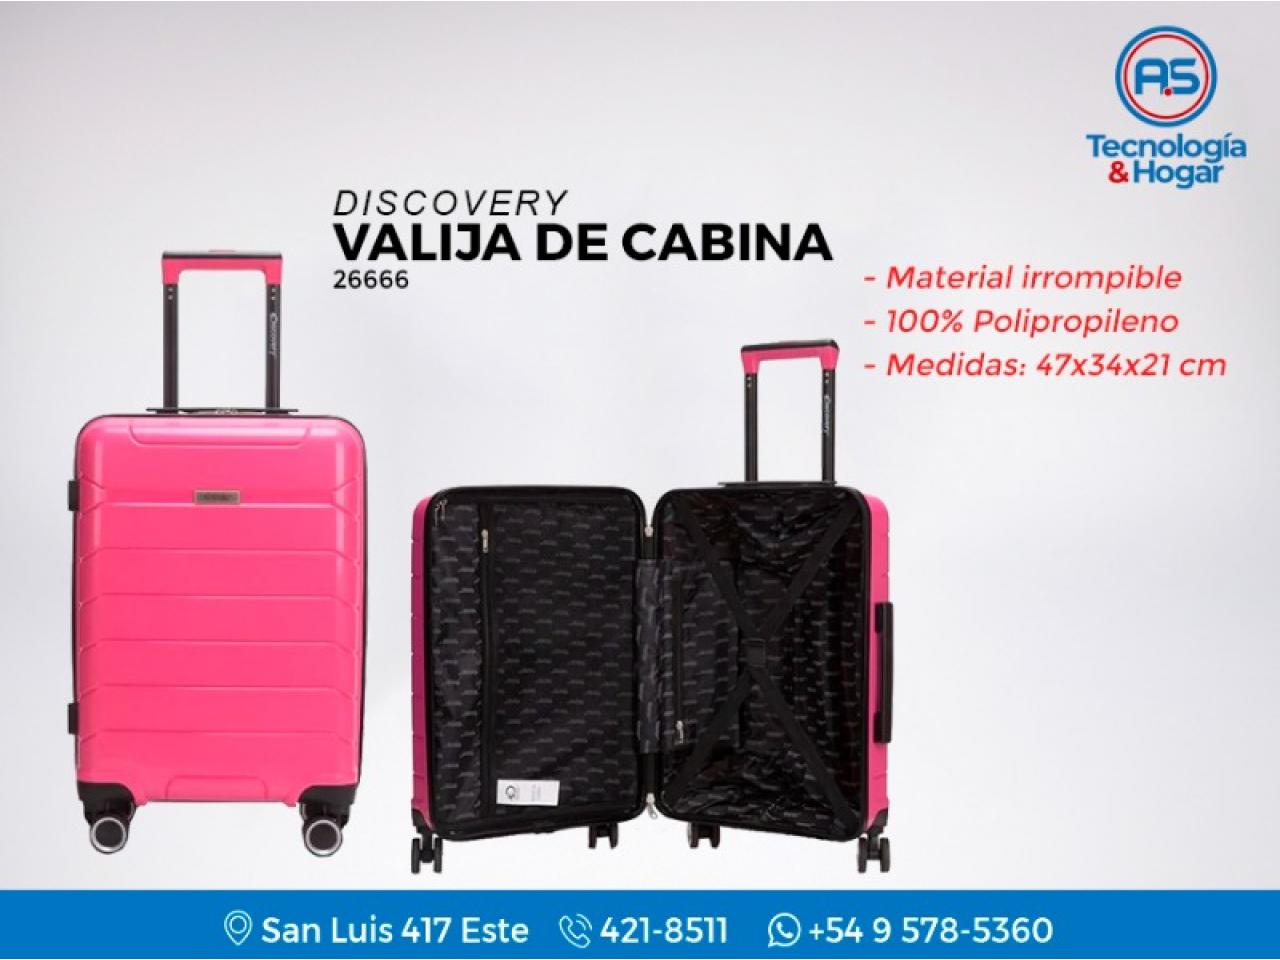 Valija On De Cabina Discovery 26666 - Material 100% Irrompible - Diseño Súper Moderno - Comprá en San Juan